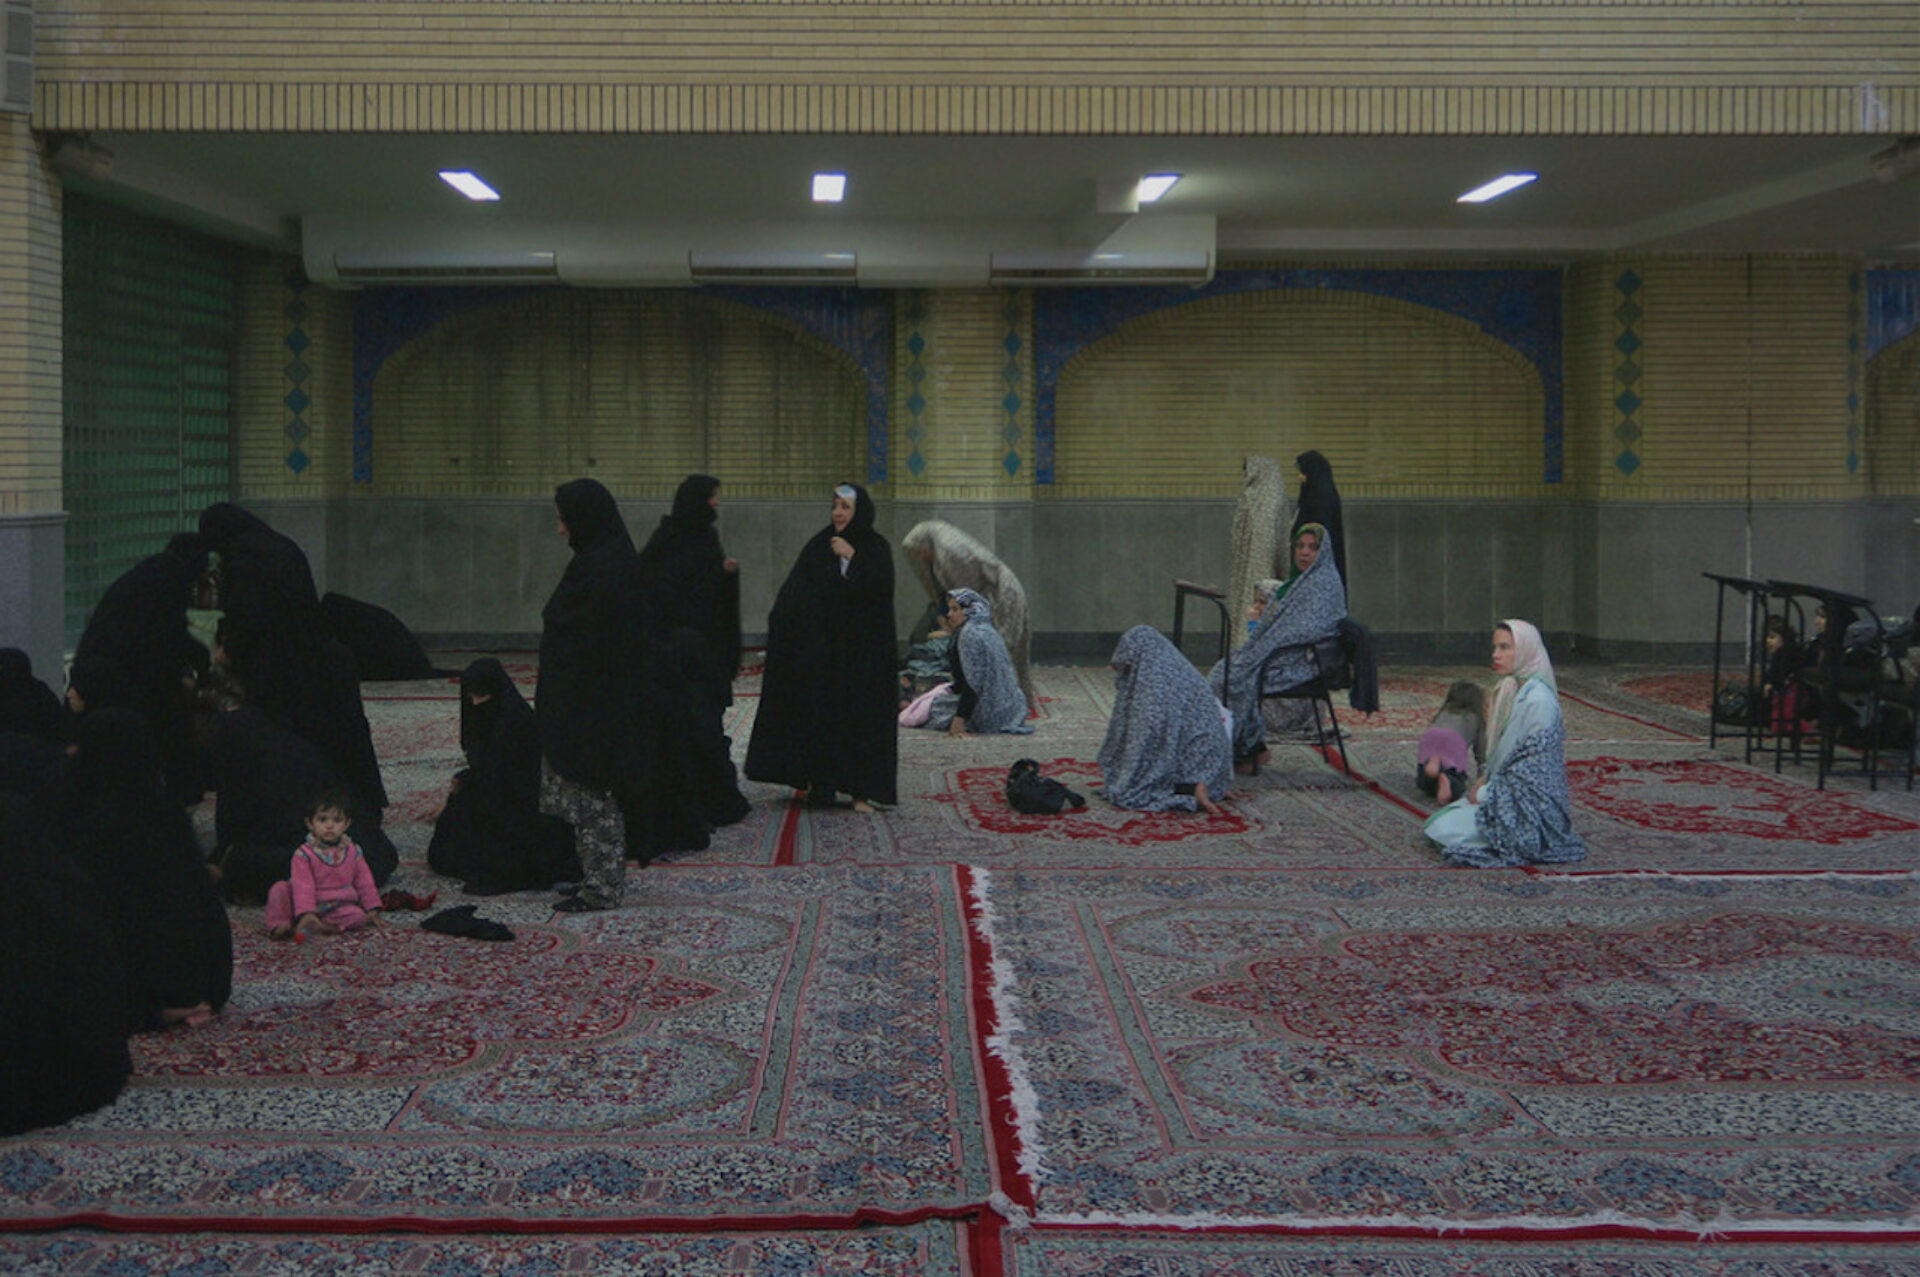 Aneta Grzeszykowska, Iranian Filmstills, 2015, #14